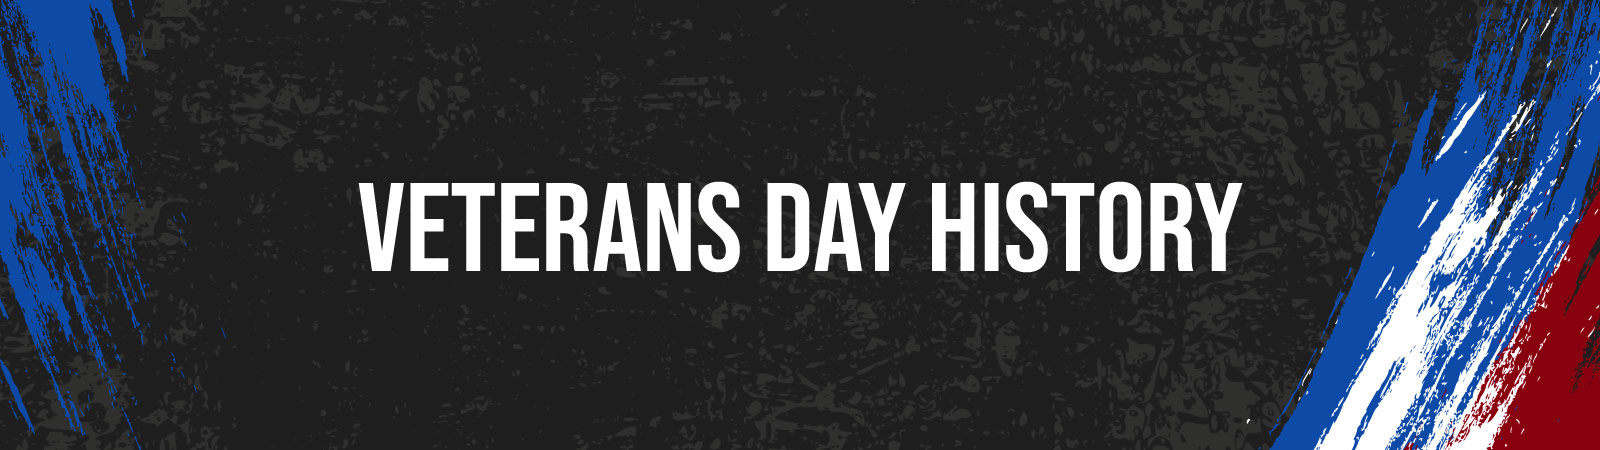 Veterans Day History